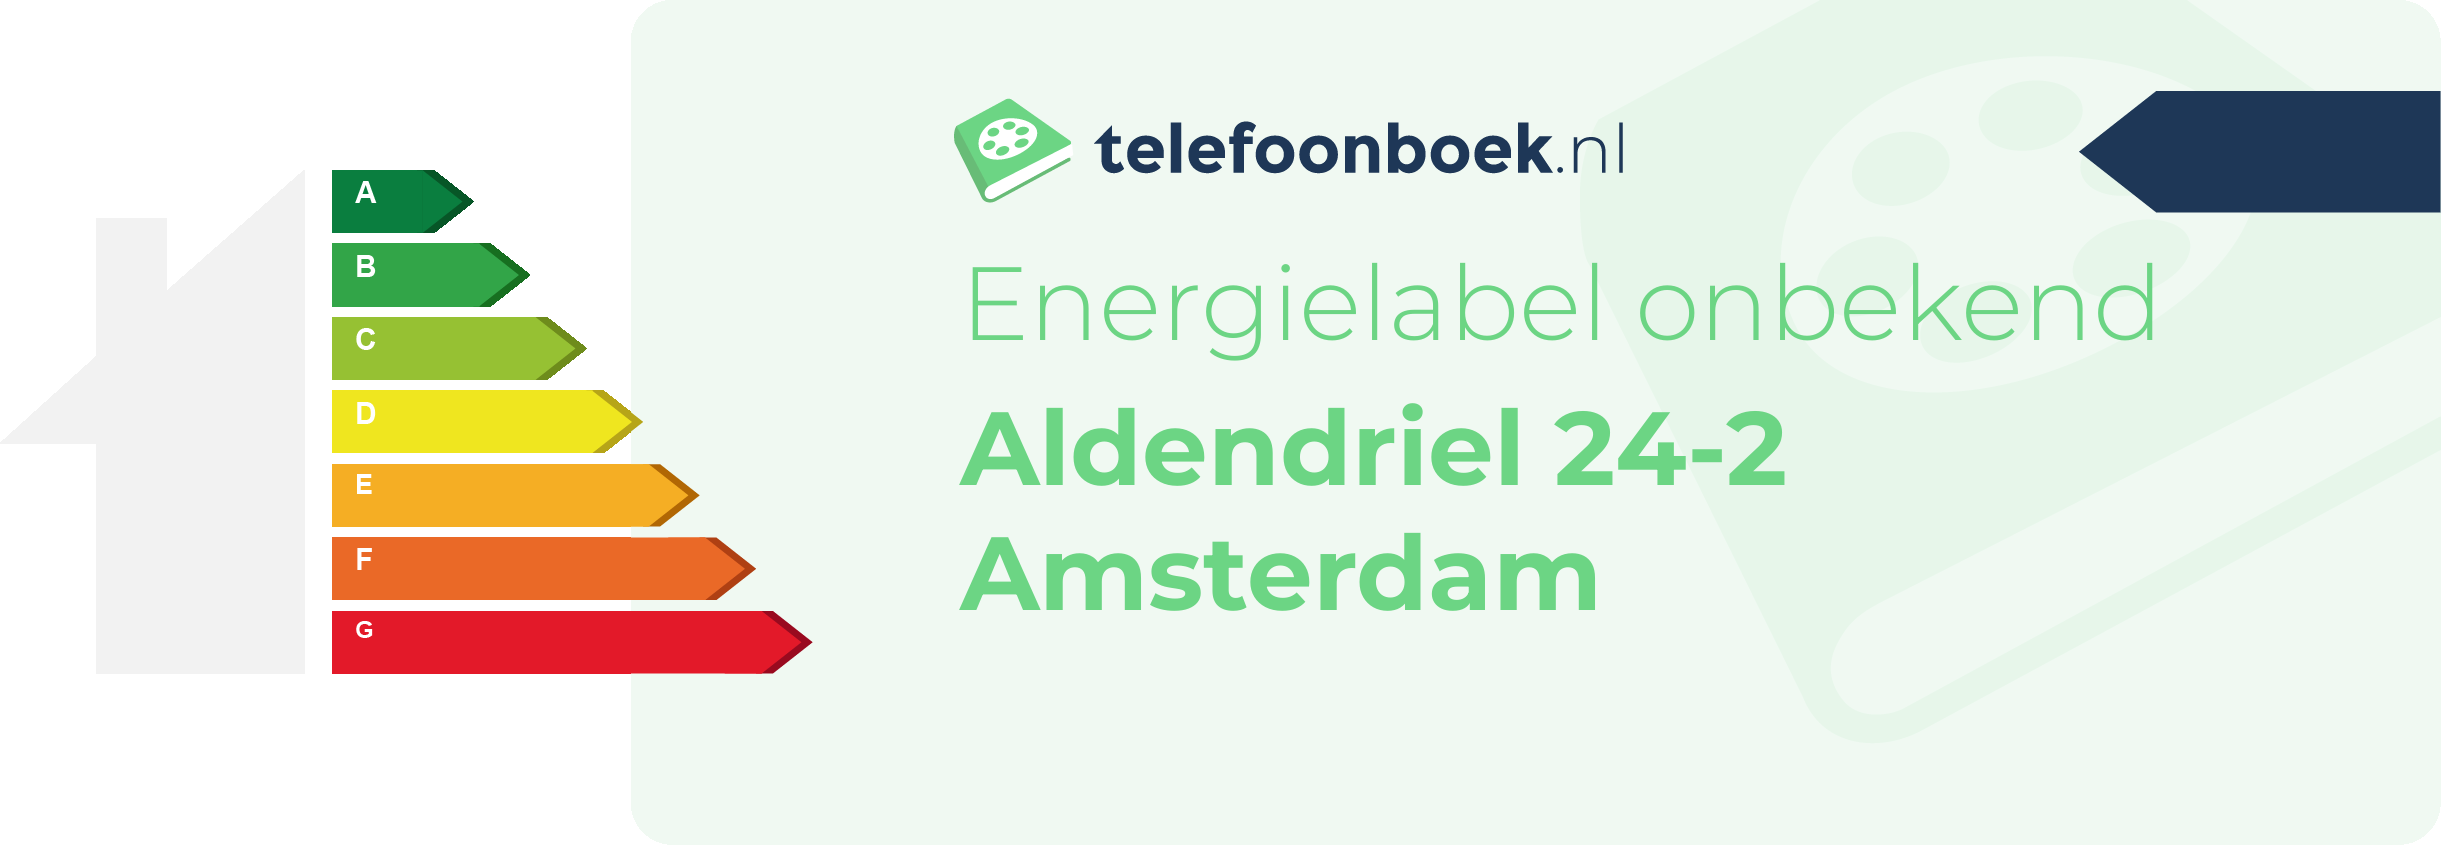 Energielabel Aldendriel 24-2 Amsterdam